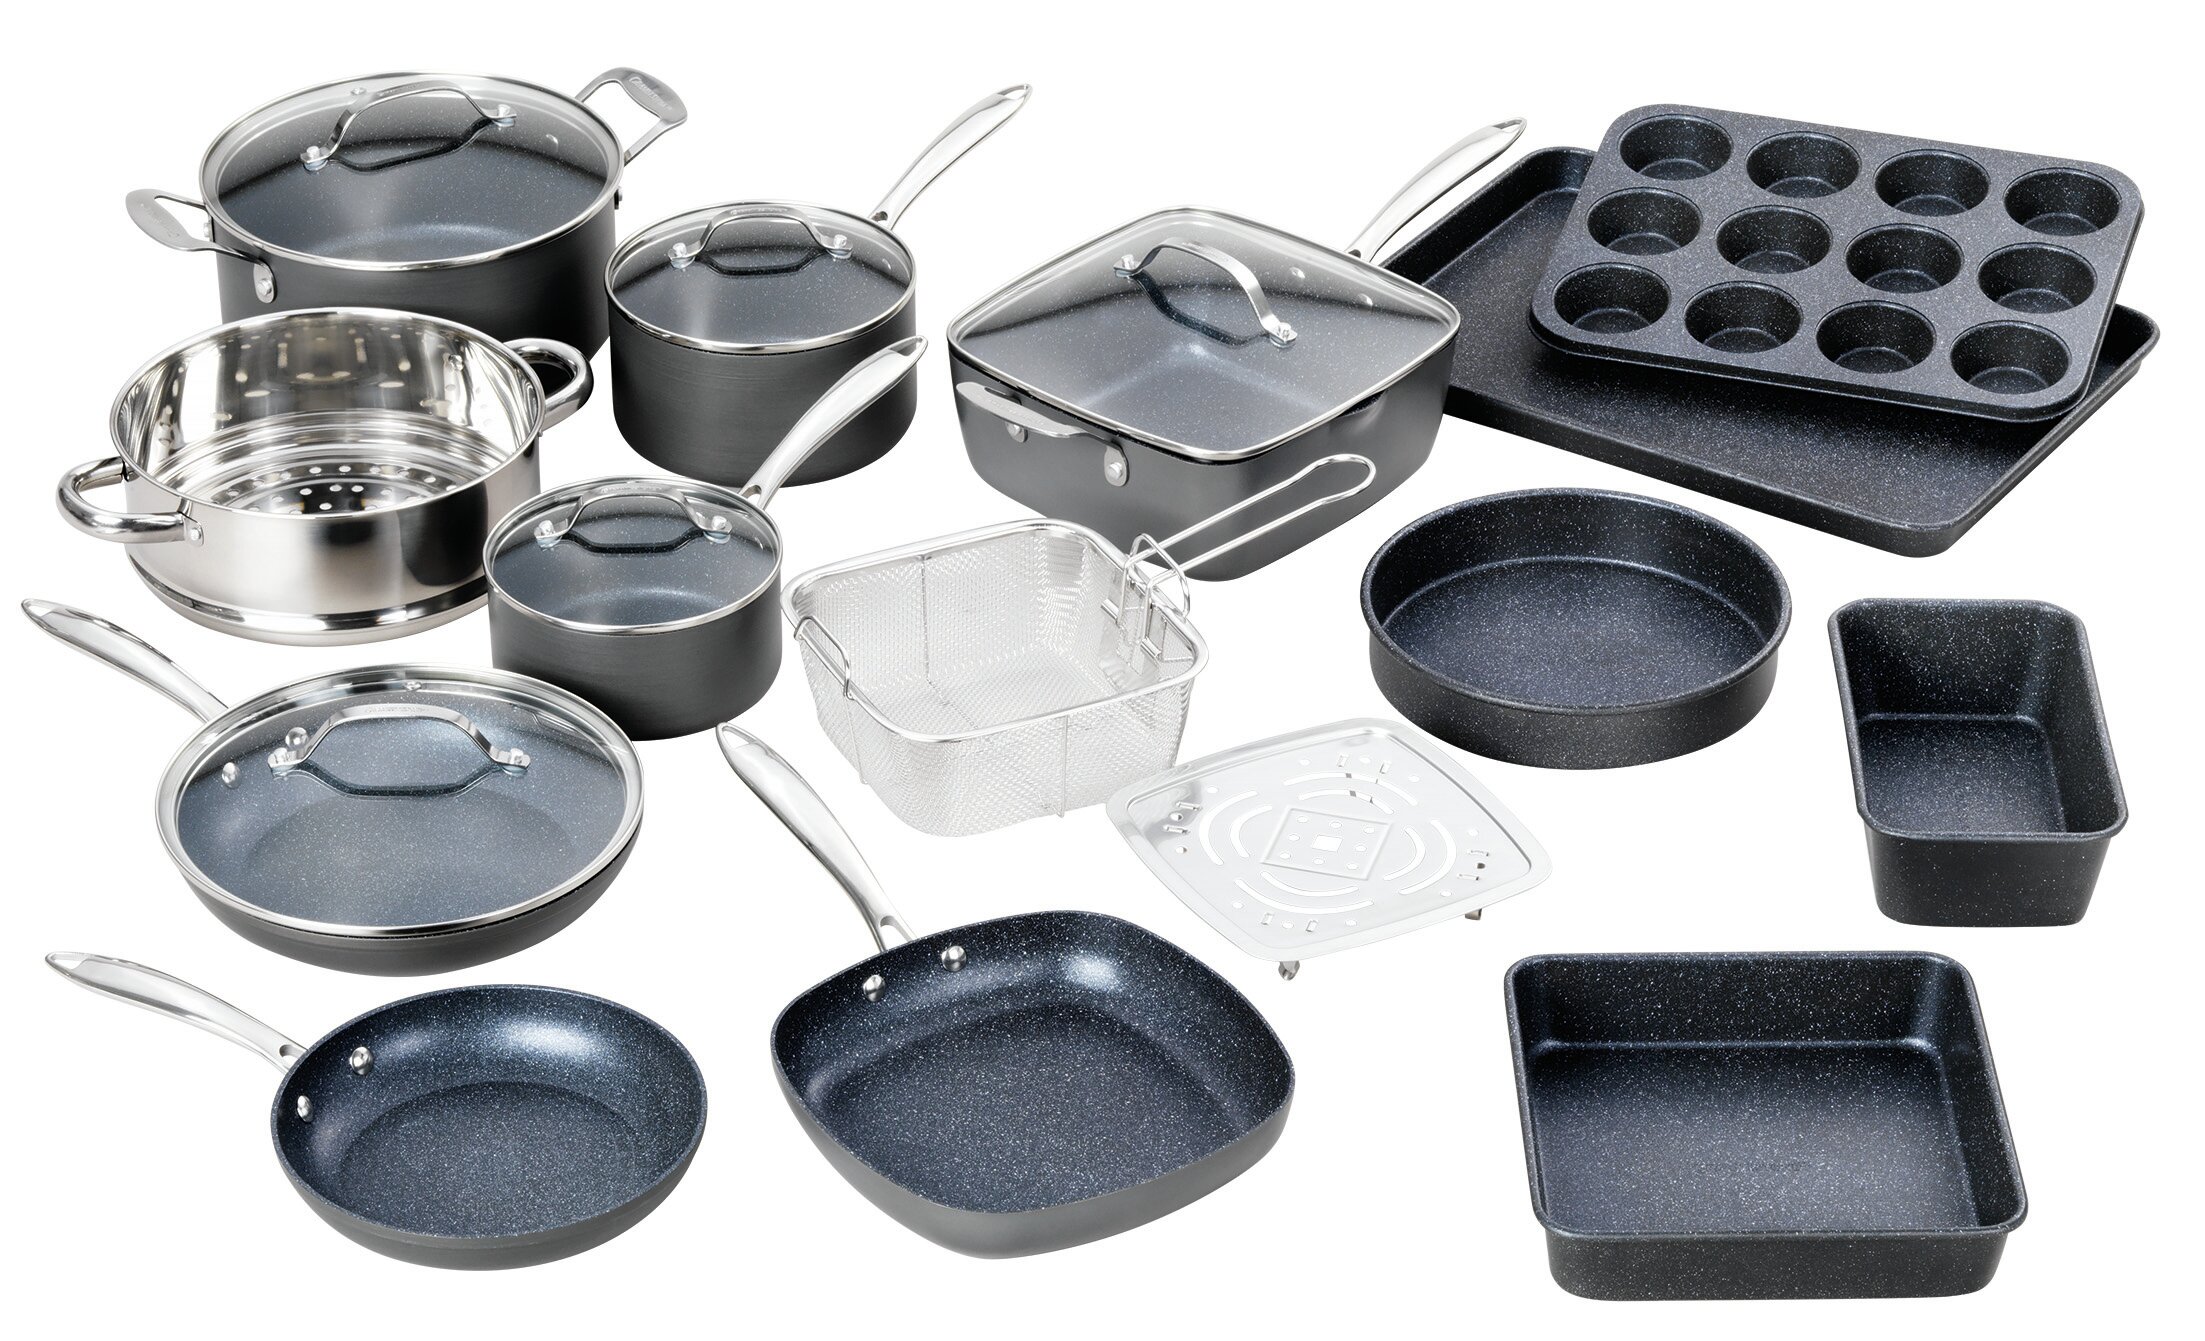 Granitestone Armor Max 20 Piece Hard Anodized Cookware Set - Black